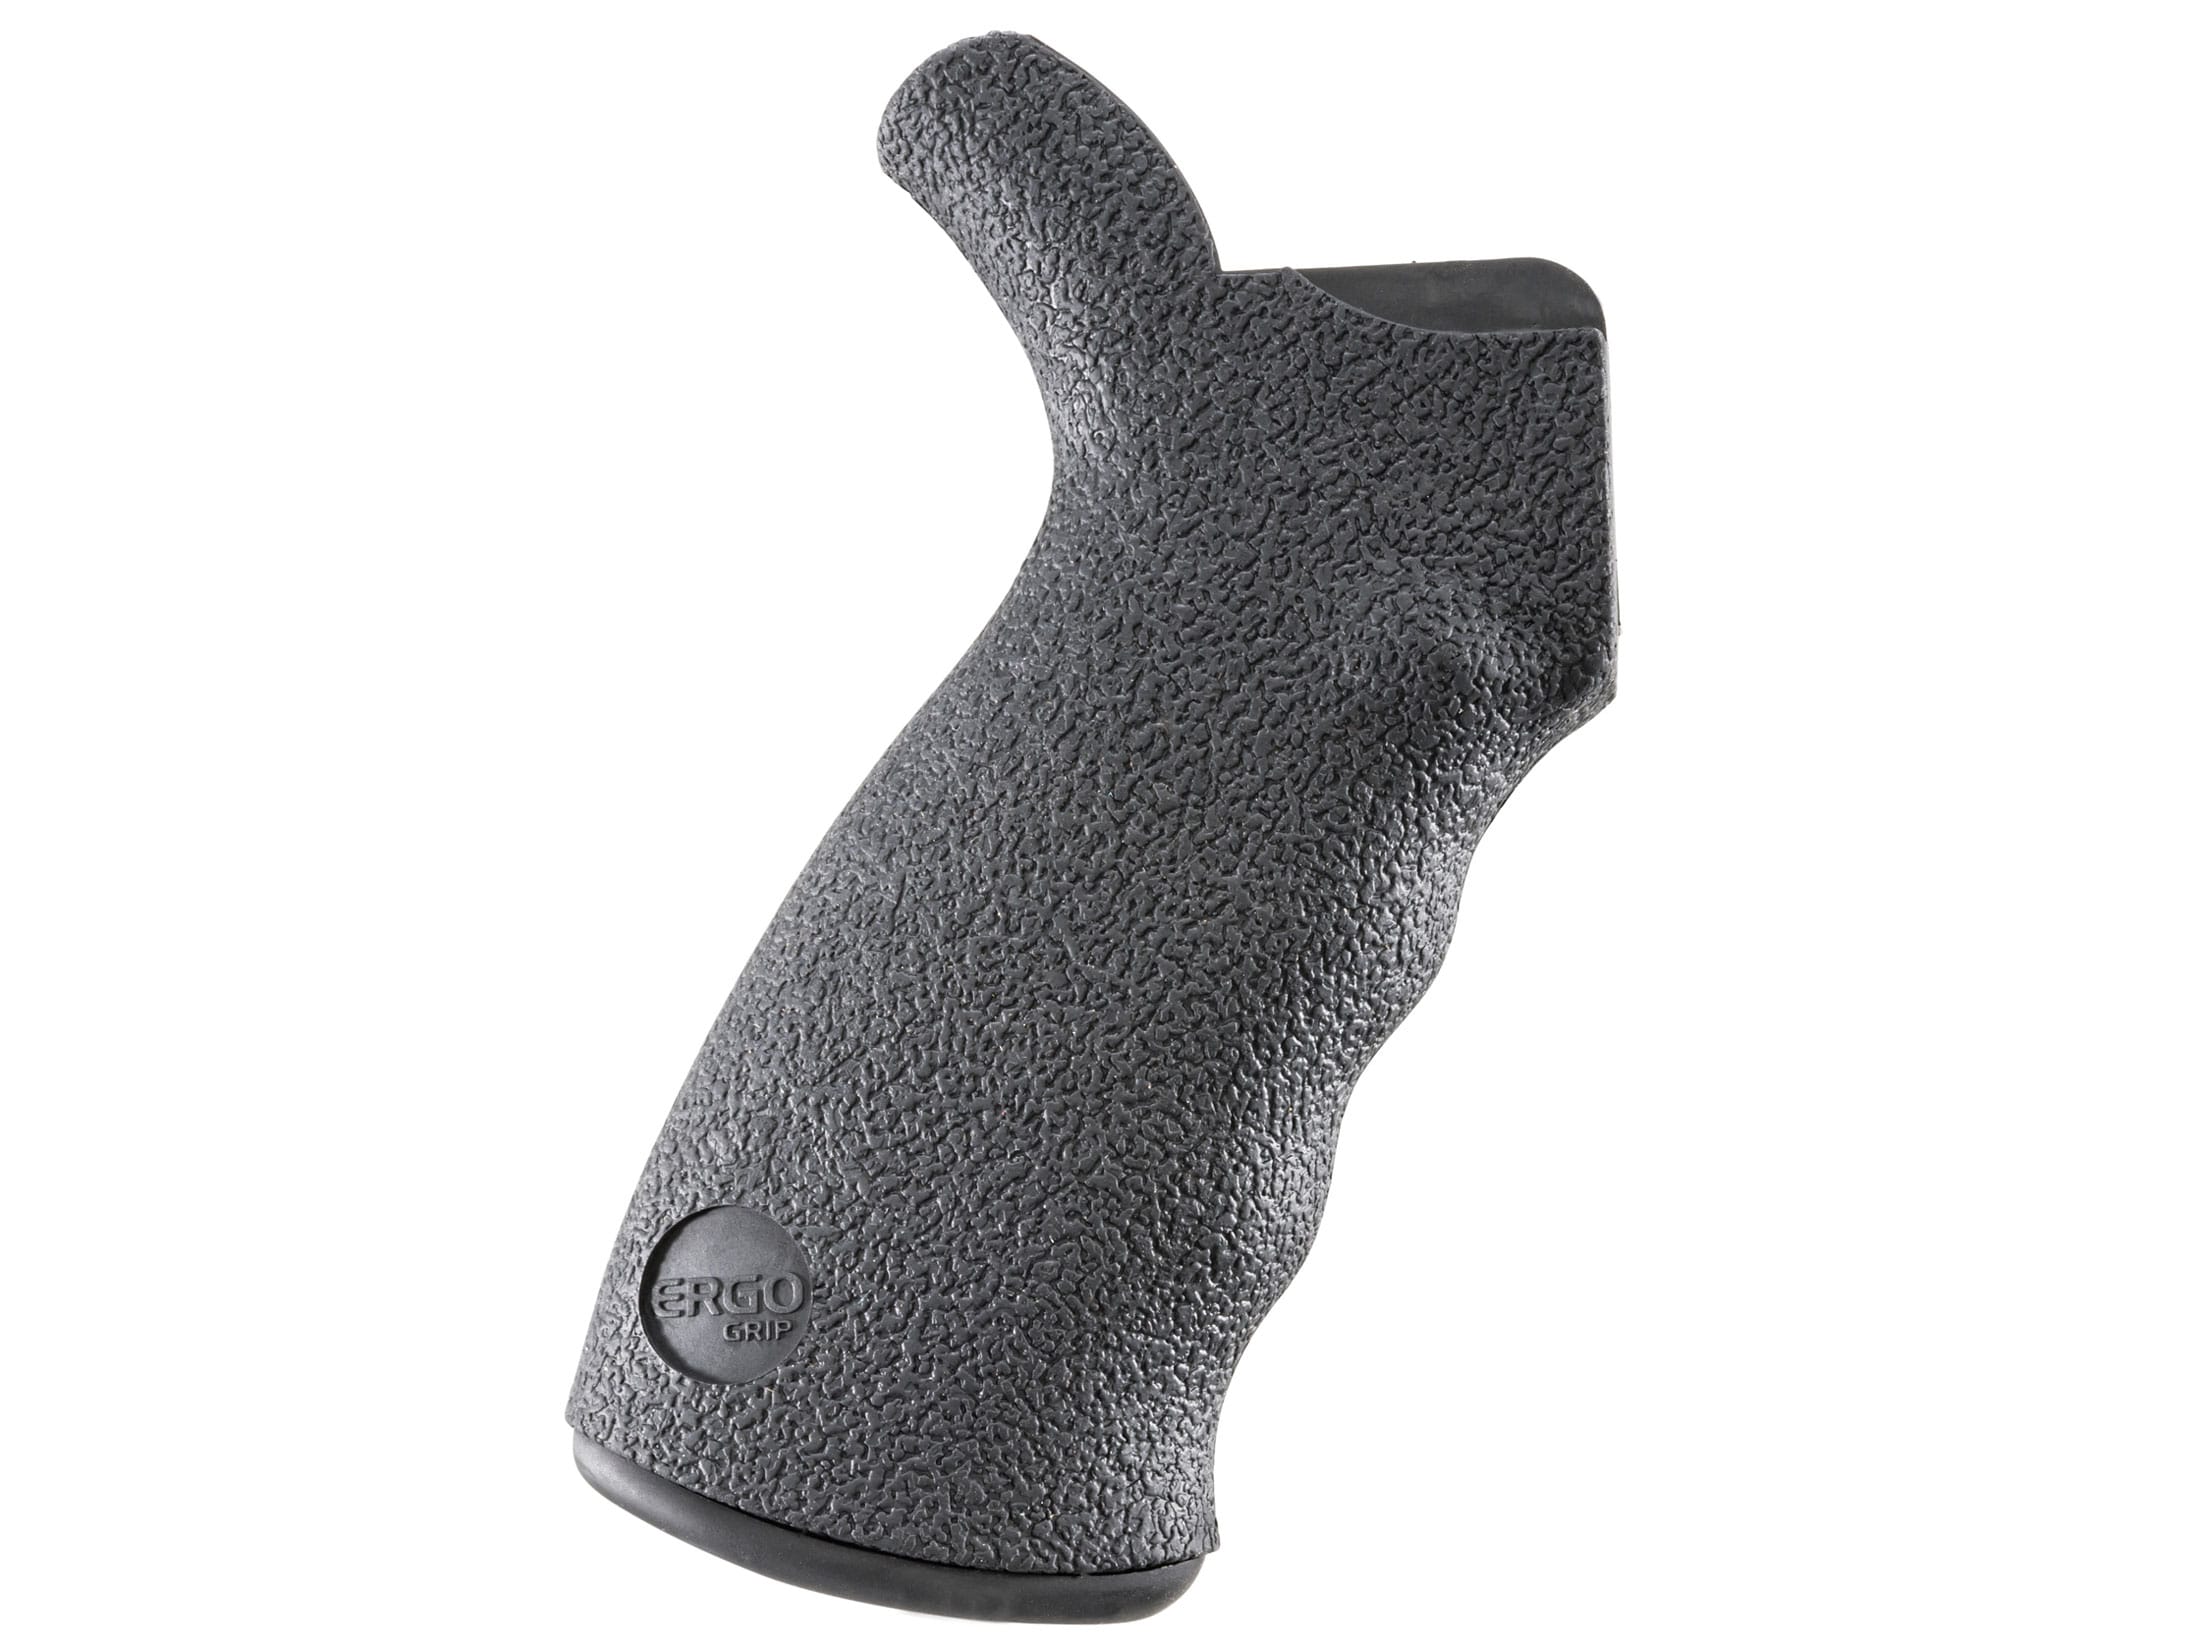 ERGO Sure Grip Aggressive Texture Pistol Grip AR-15, LR-308 Overmolded